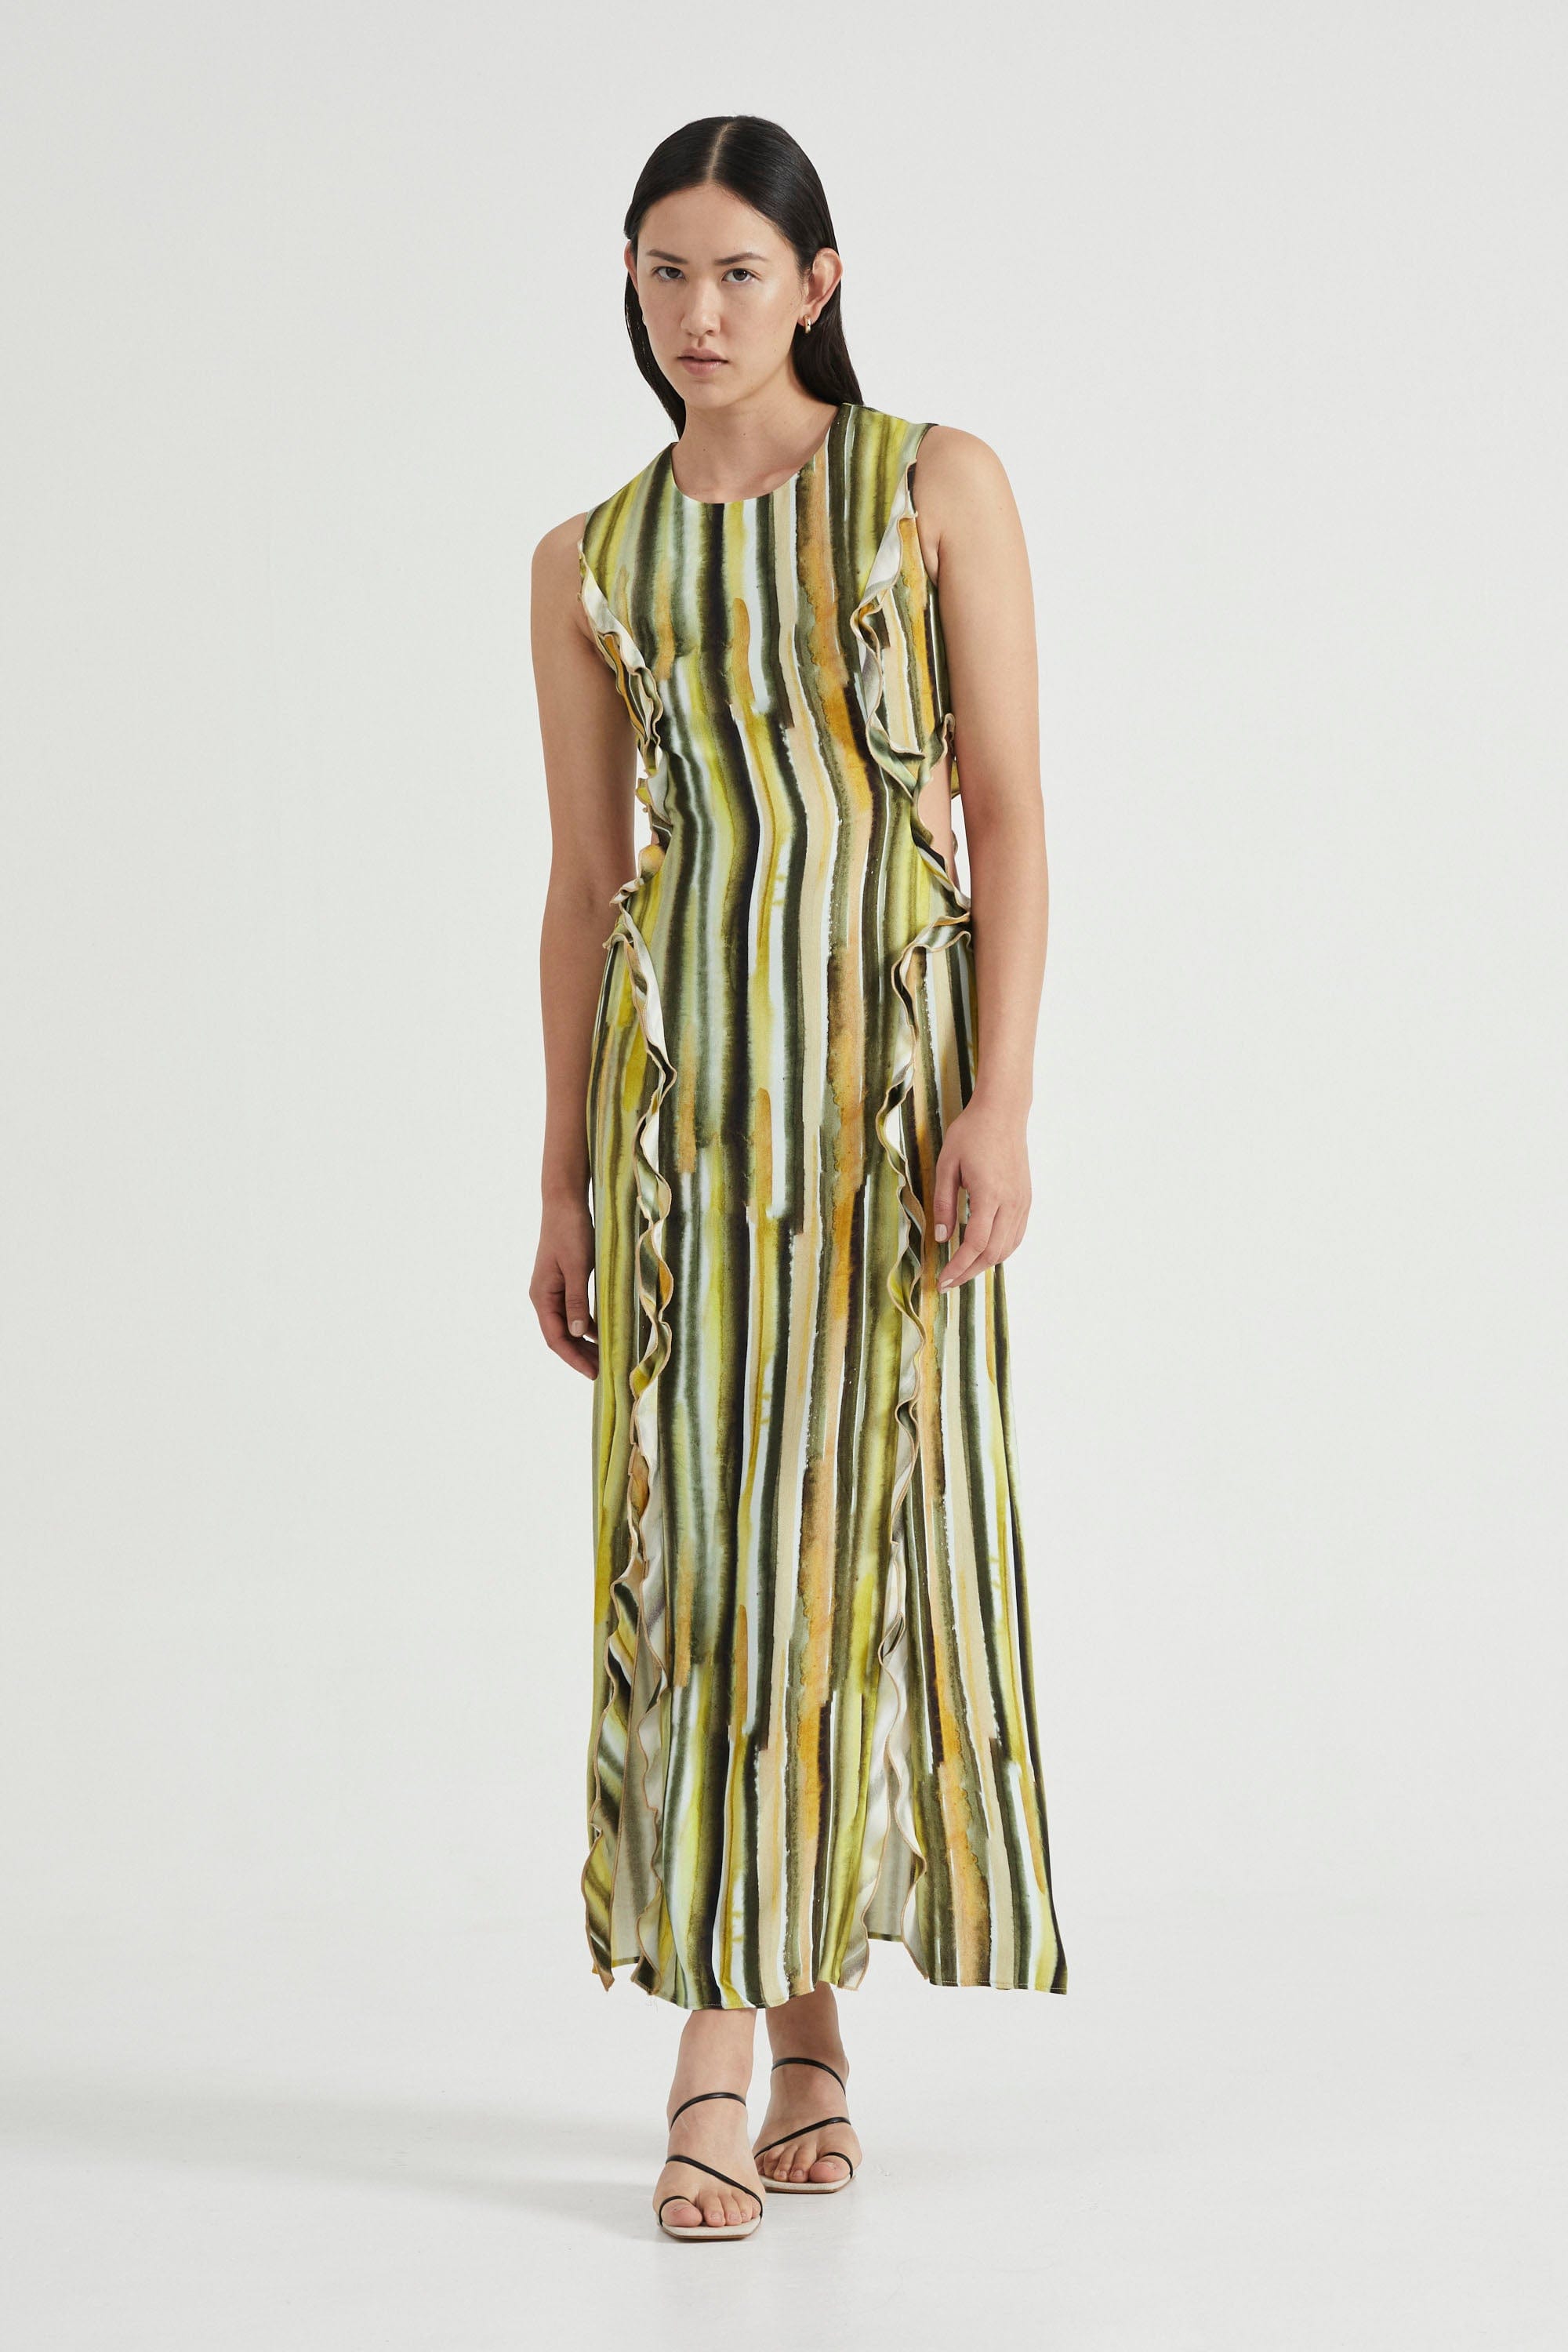 DRESSES | Third Form | Dresses for Women | Australian Designer — Page 3 ...